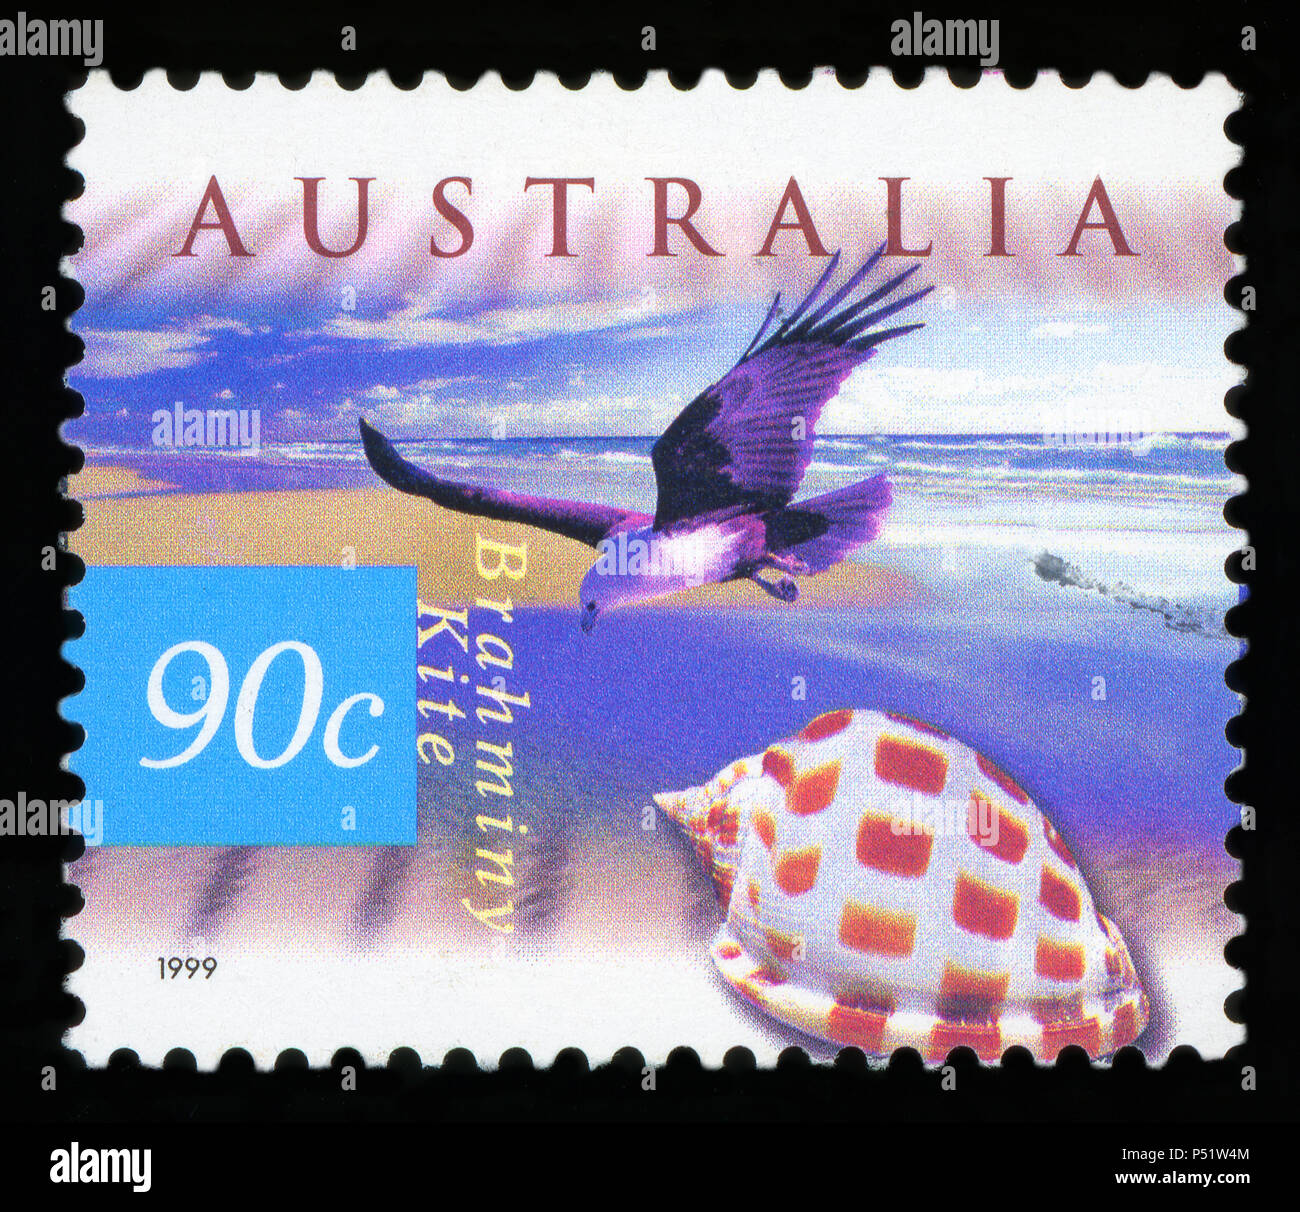 AUSTRALIA - CIRCA 1999: A stamp printed in Australia shows a Brahminy Kite bird flying, circa 1999 Stock Photo